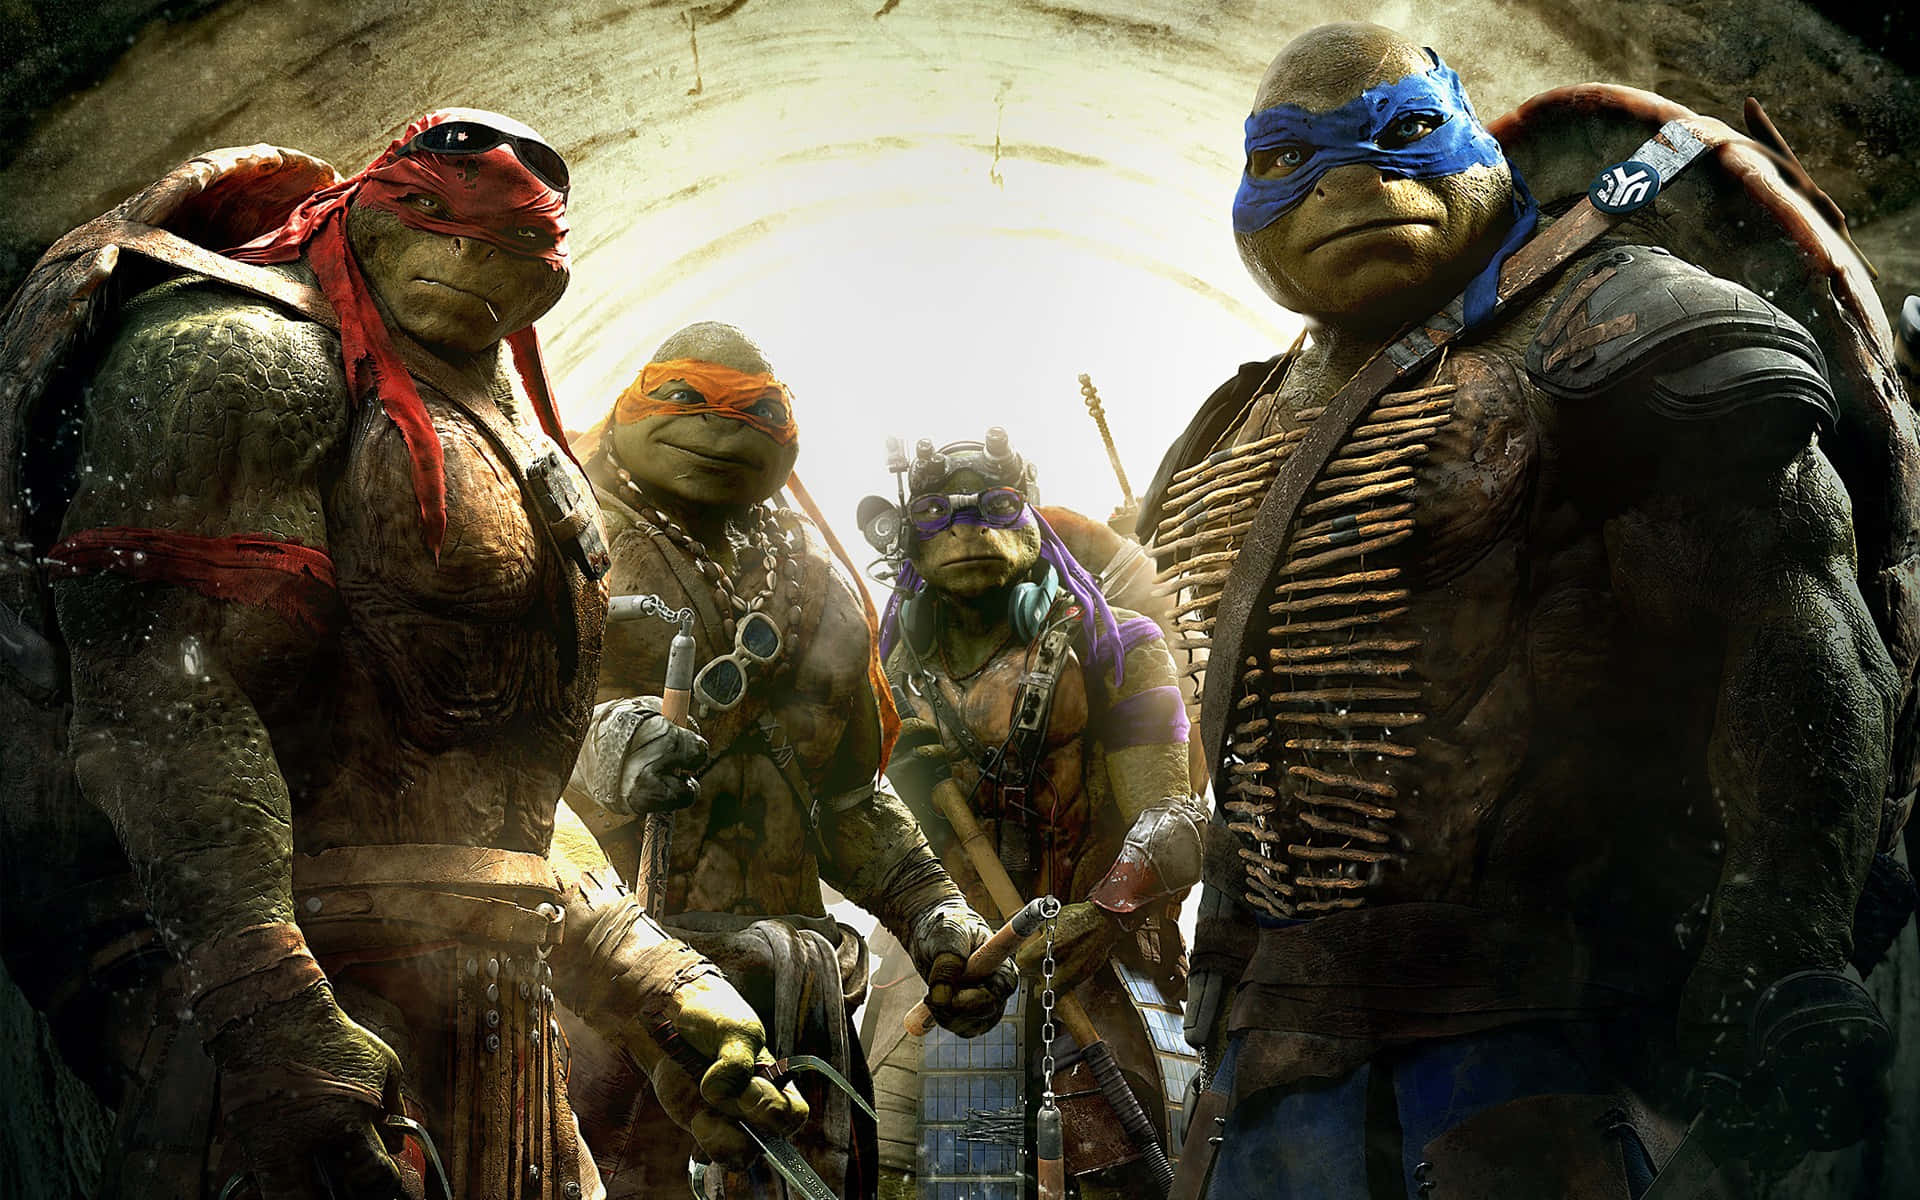 "Leonardo Leading the Ninja Turtles in Action"